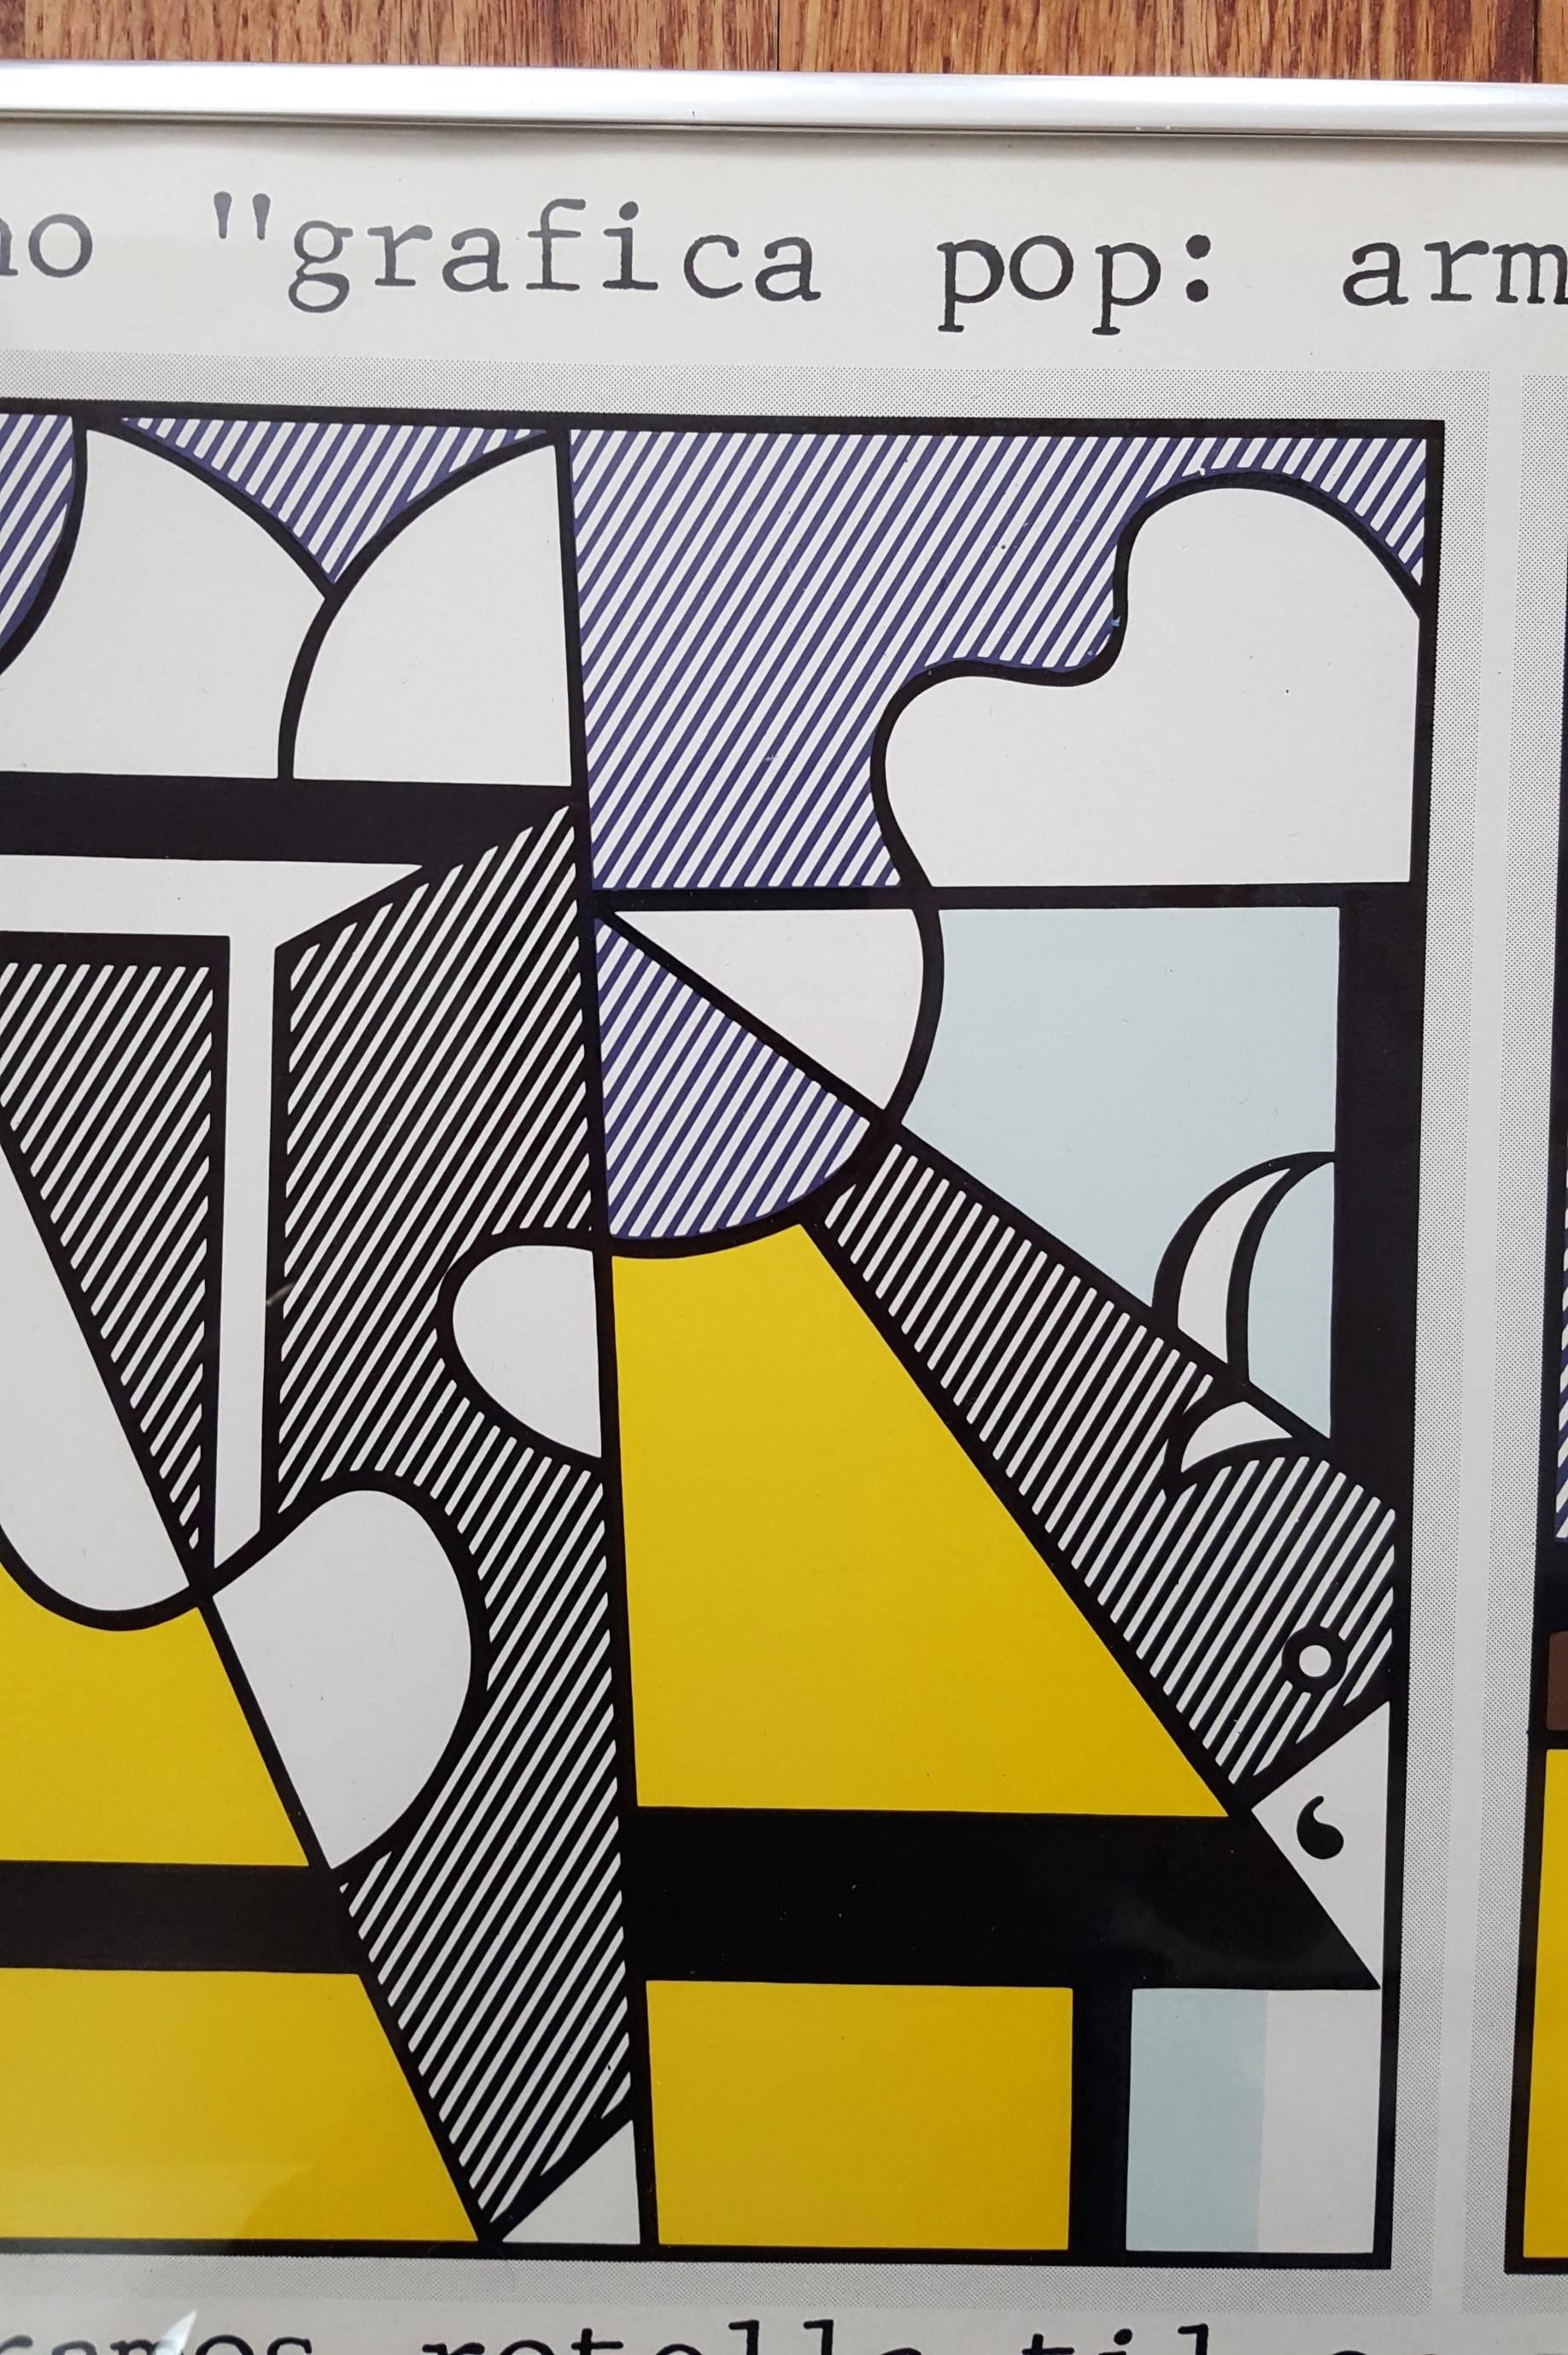 Grafica Pop (Cow Going Abstract) - Pop Art Print by (after) Roy Lichtenstein